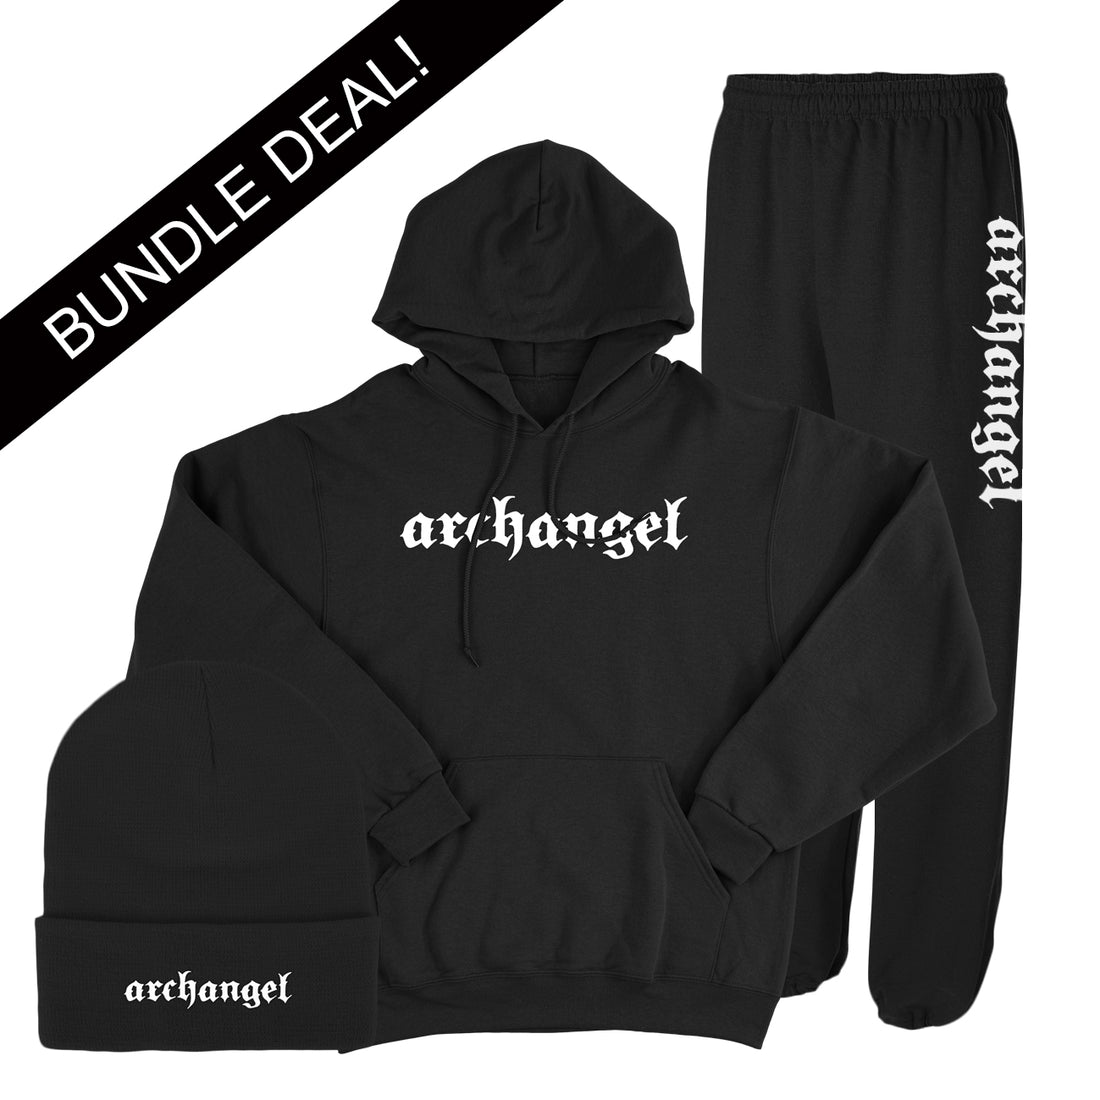 Archangel - Hoodie + Jogger + Hat - Bundle